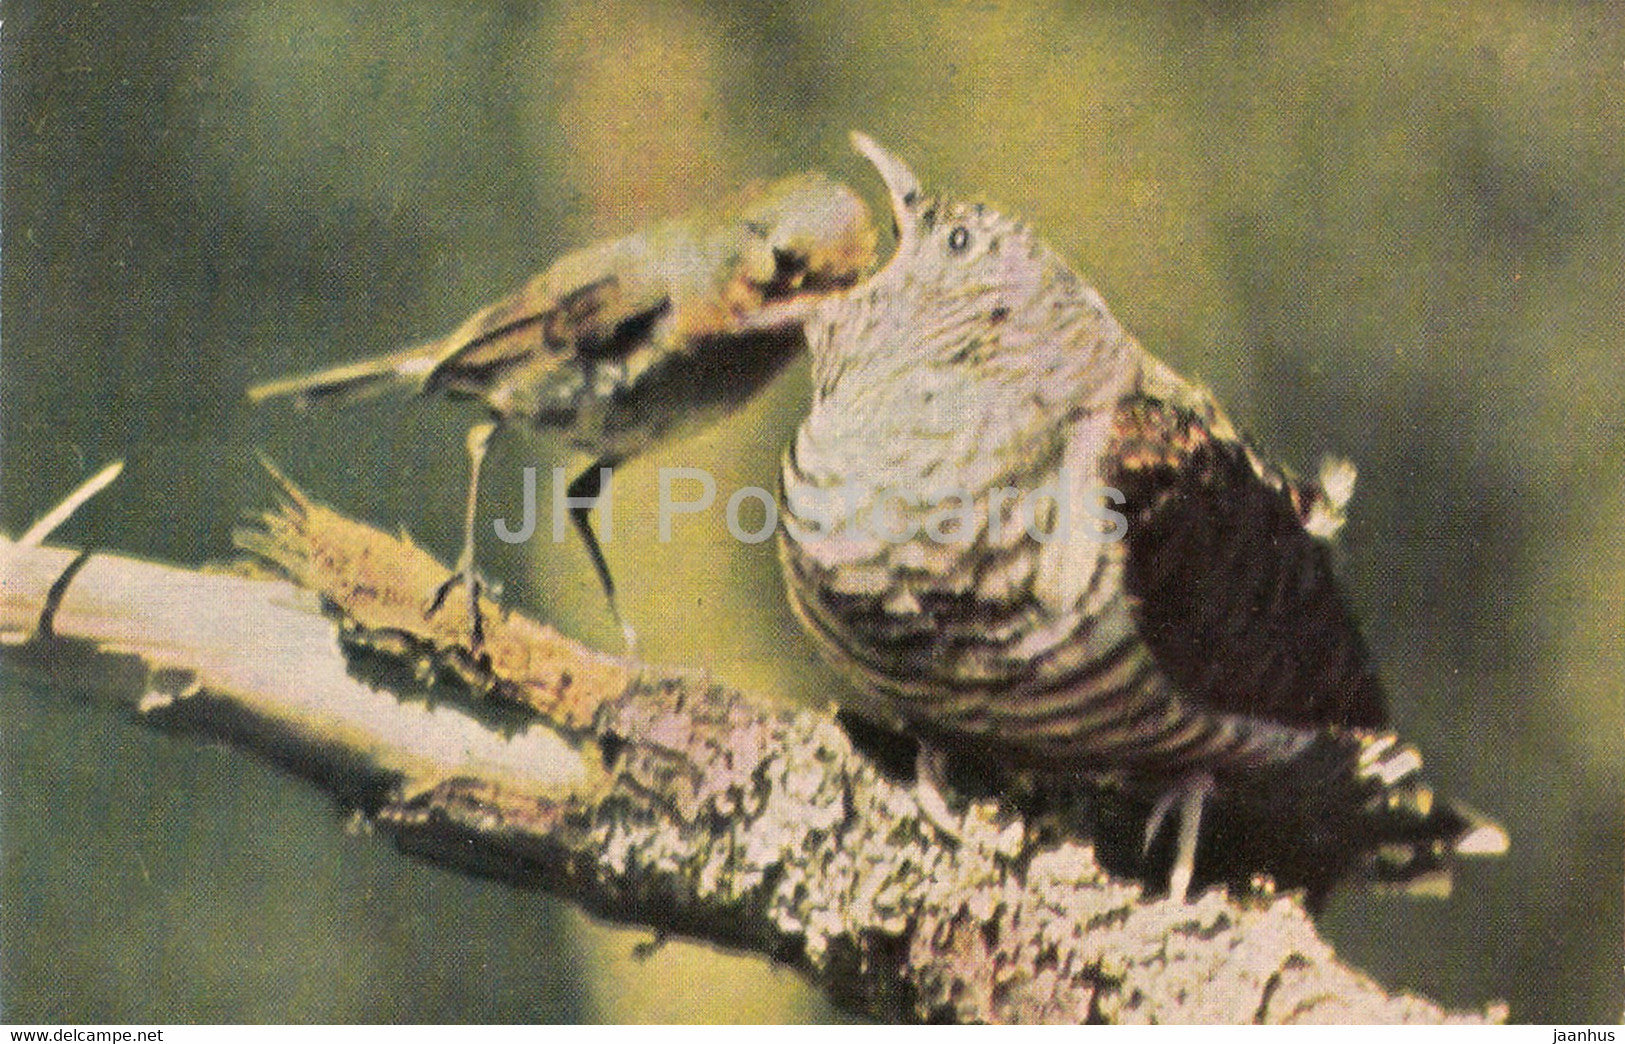 European robin - Erithacus rubecula - birds - 1968 - Russia USSR - unused - JH Postcards